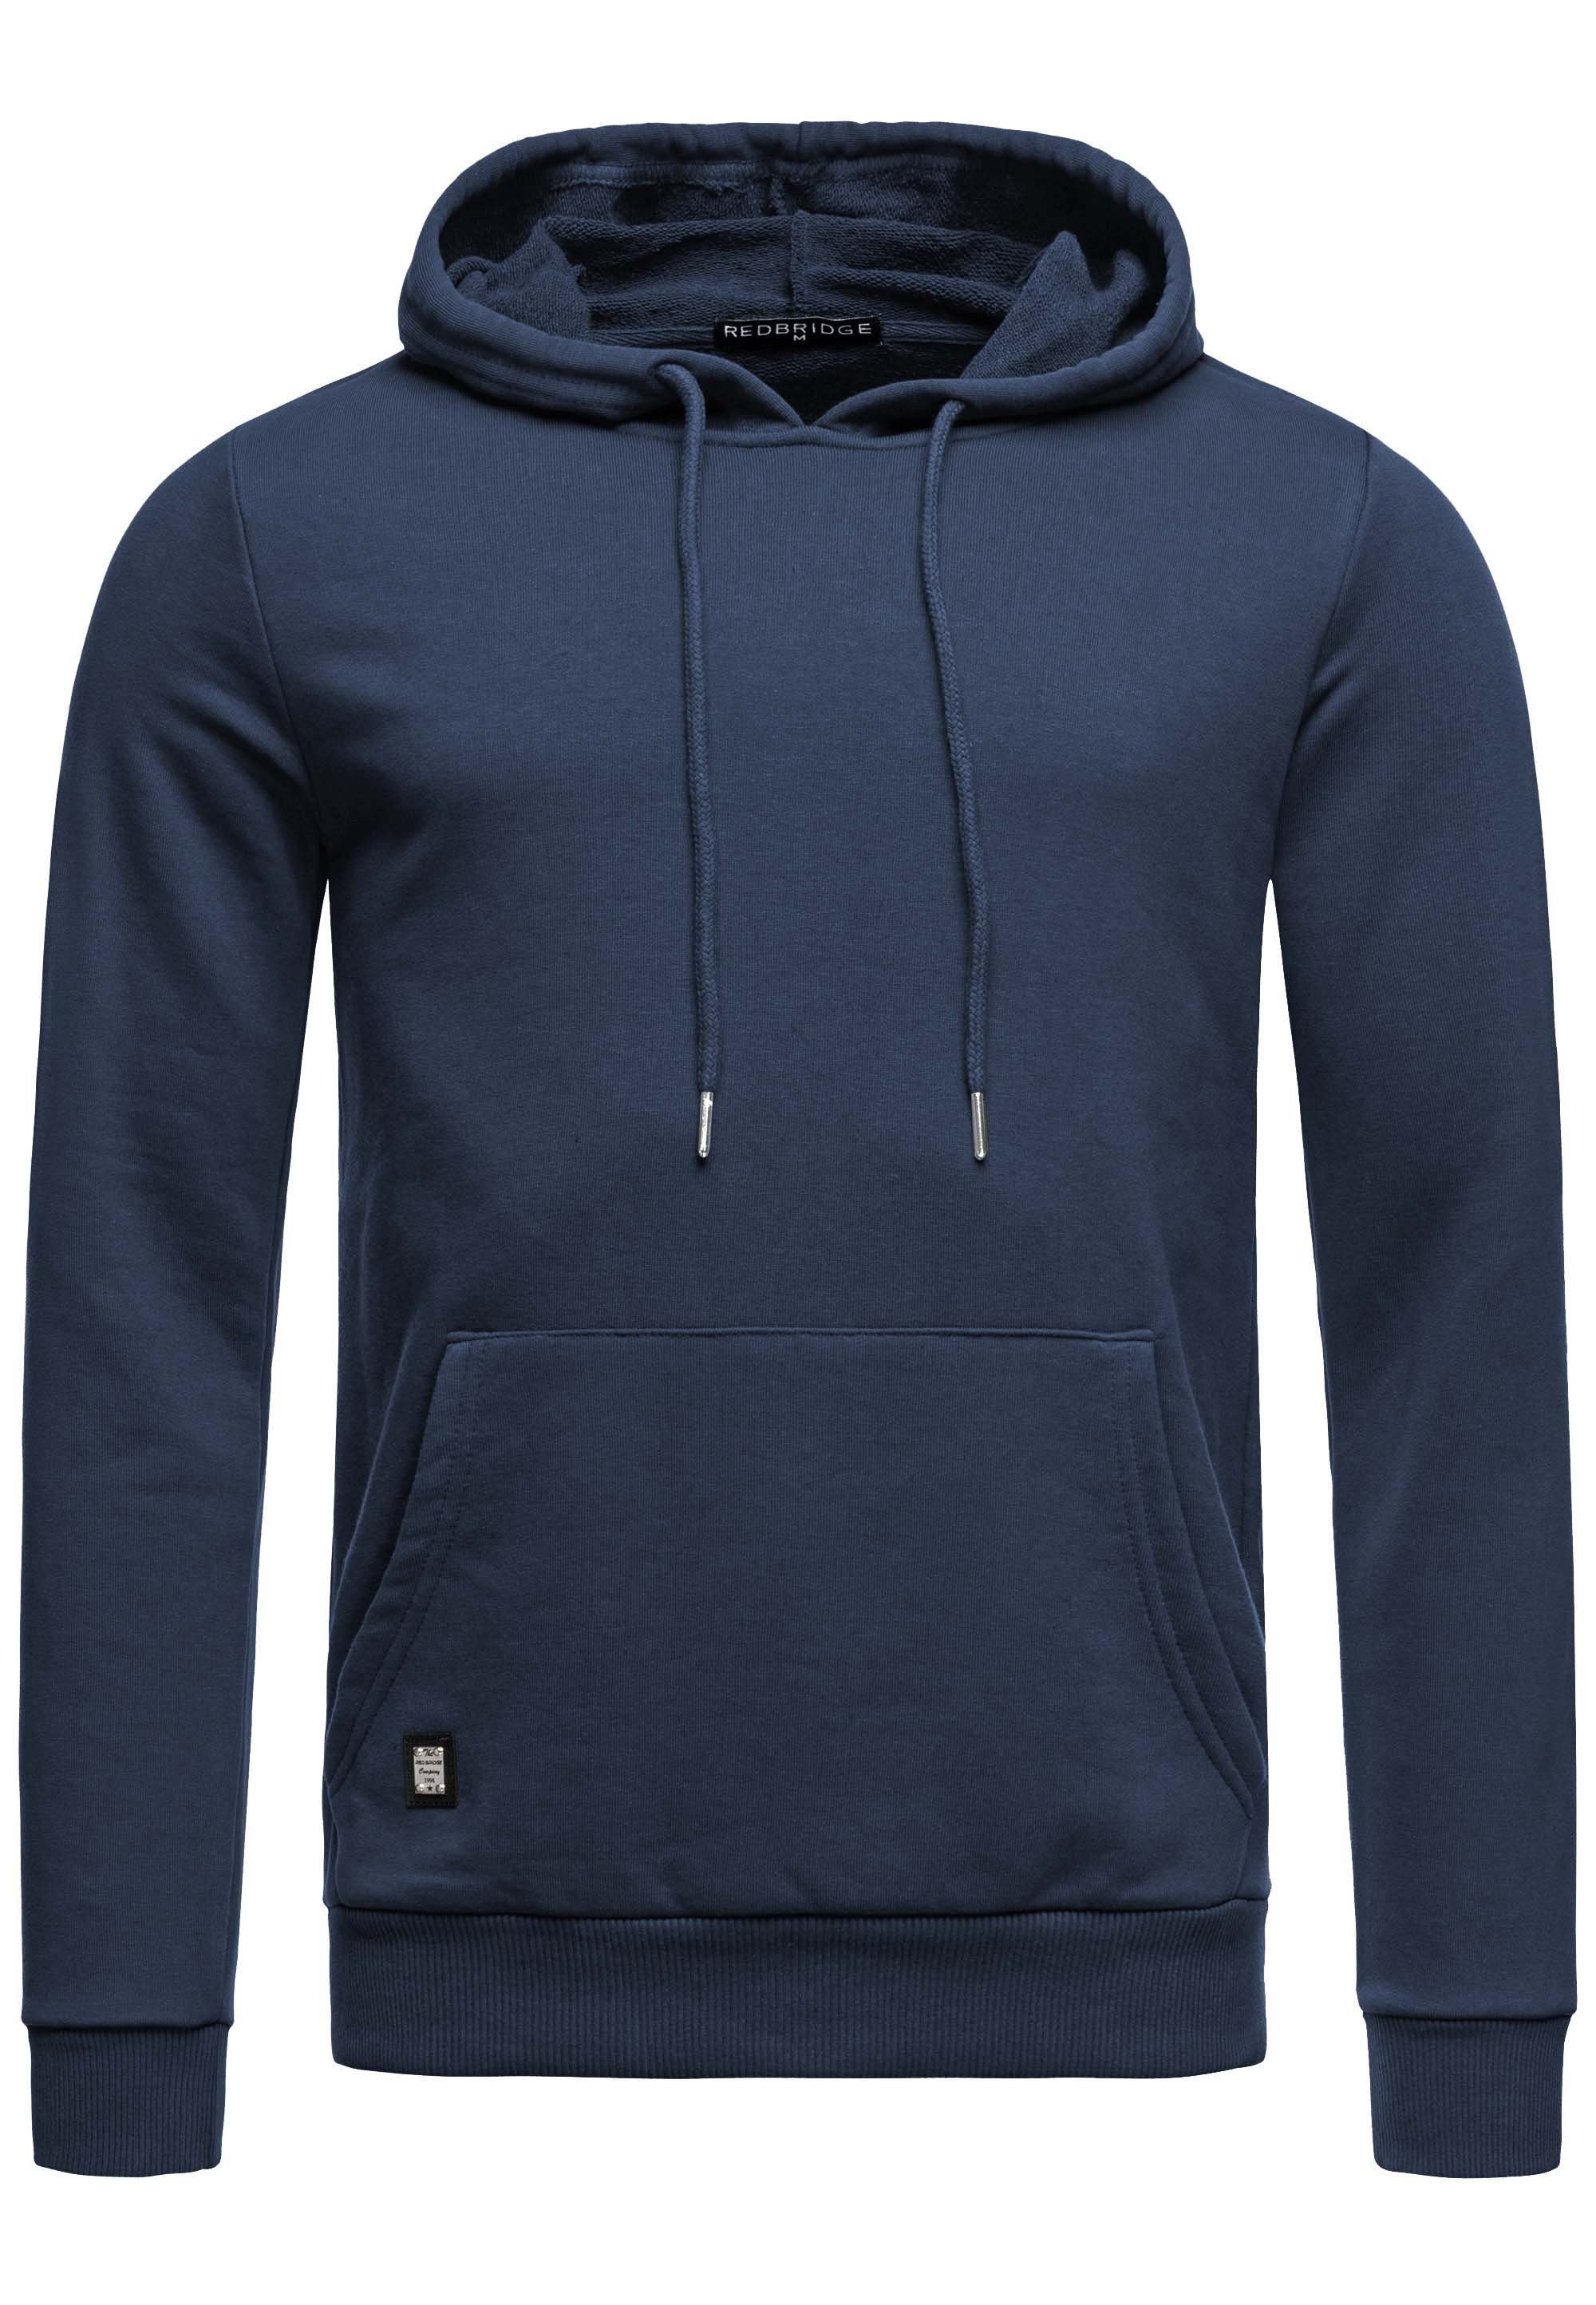 RedBridge Kapuzensweatshirt Hoodie mit Kängurutasche Premium Qualität Navyblau